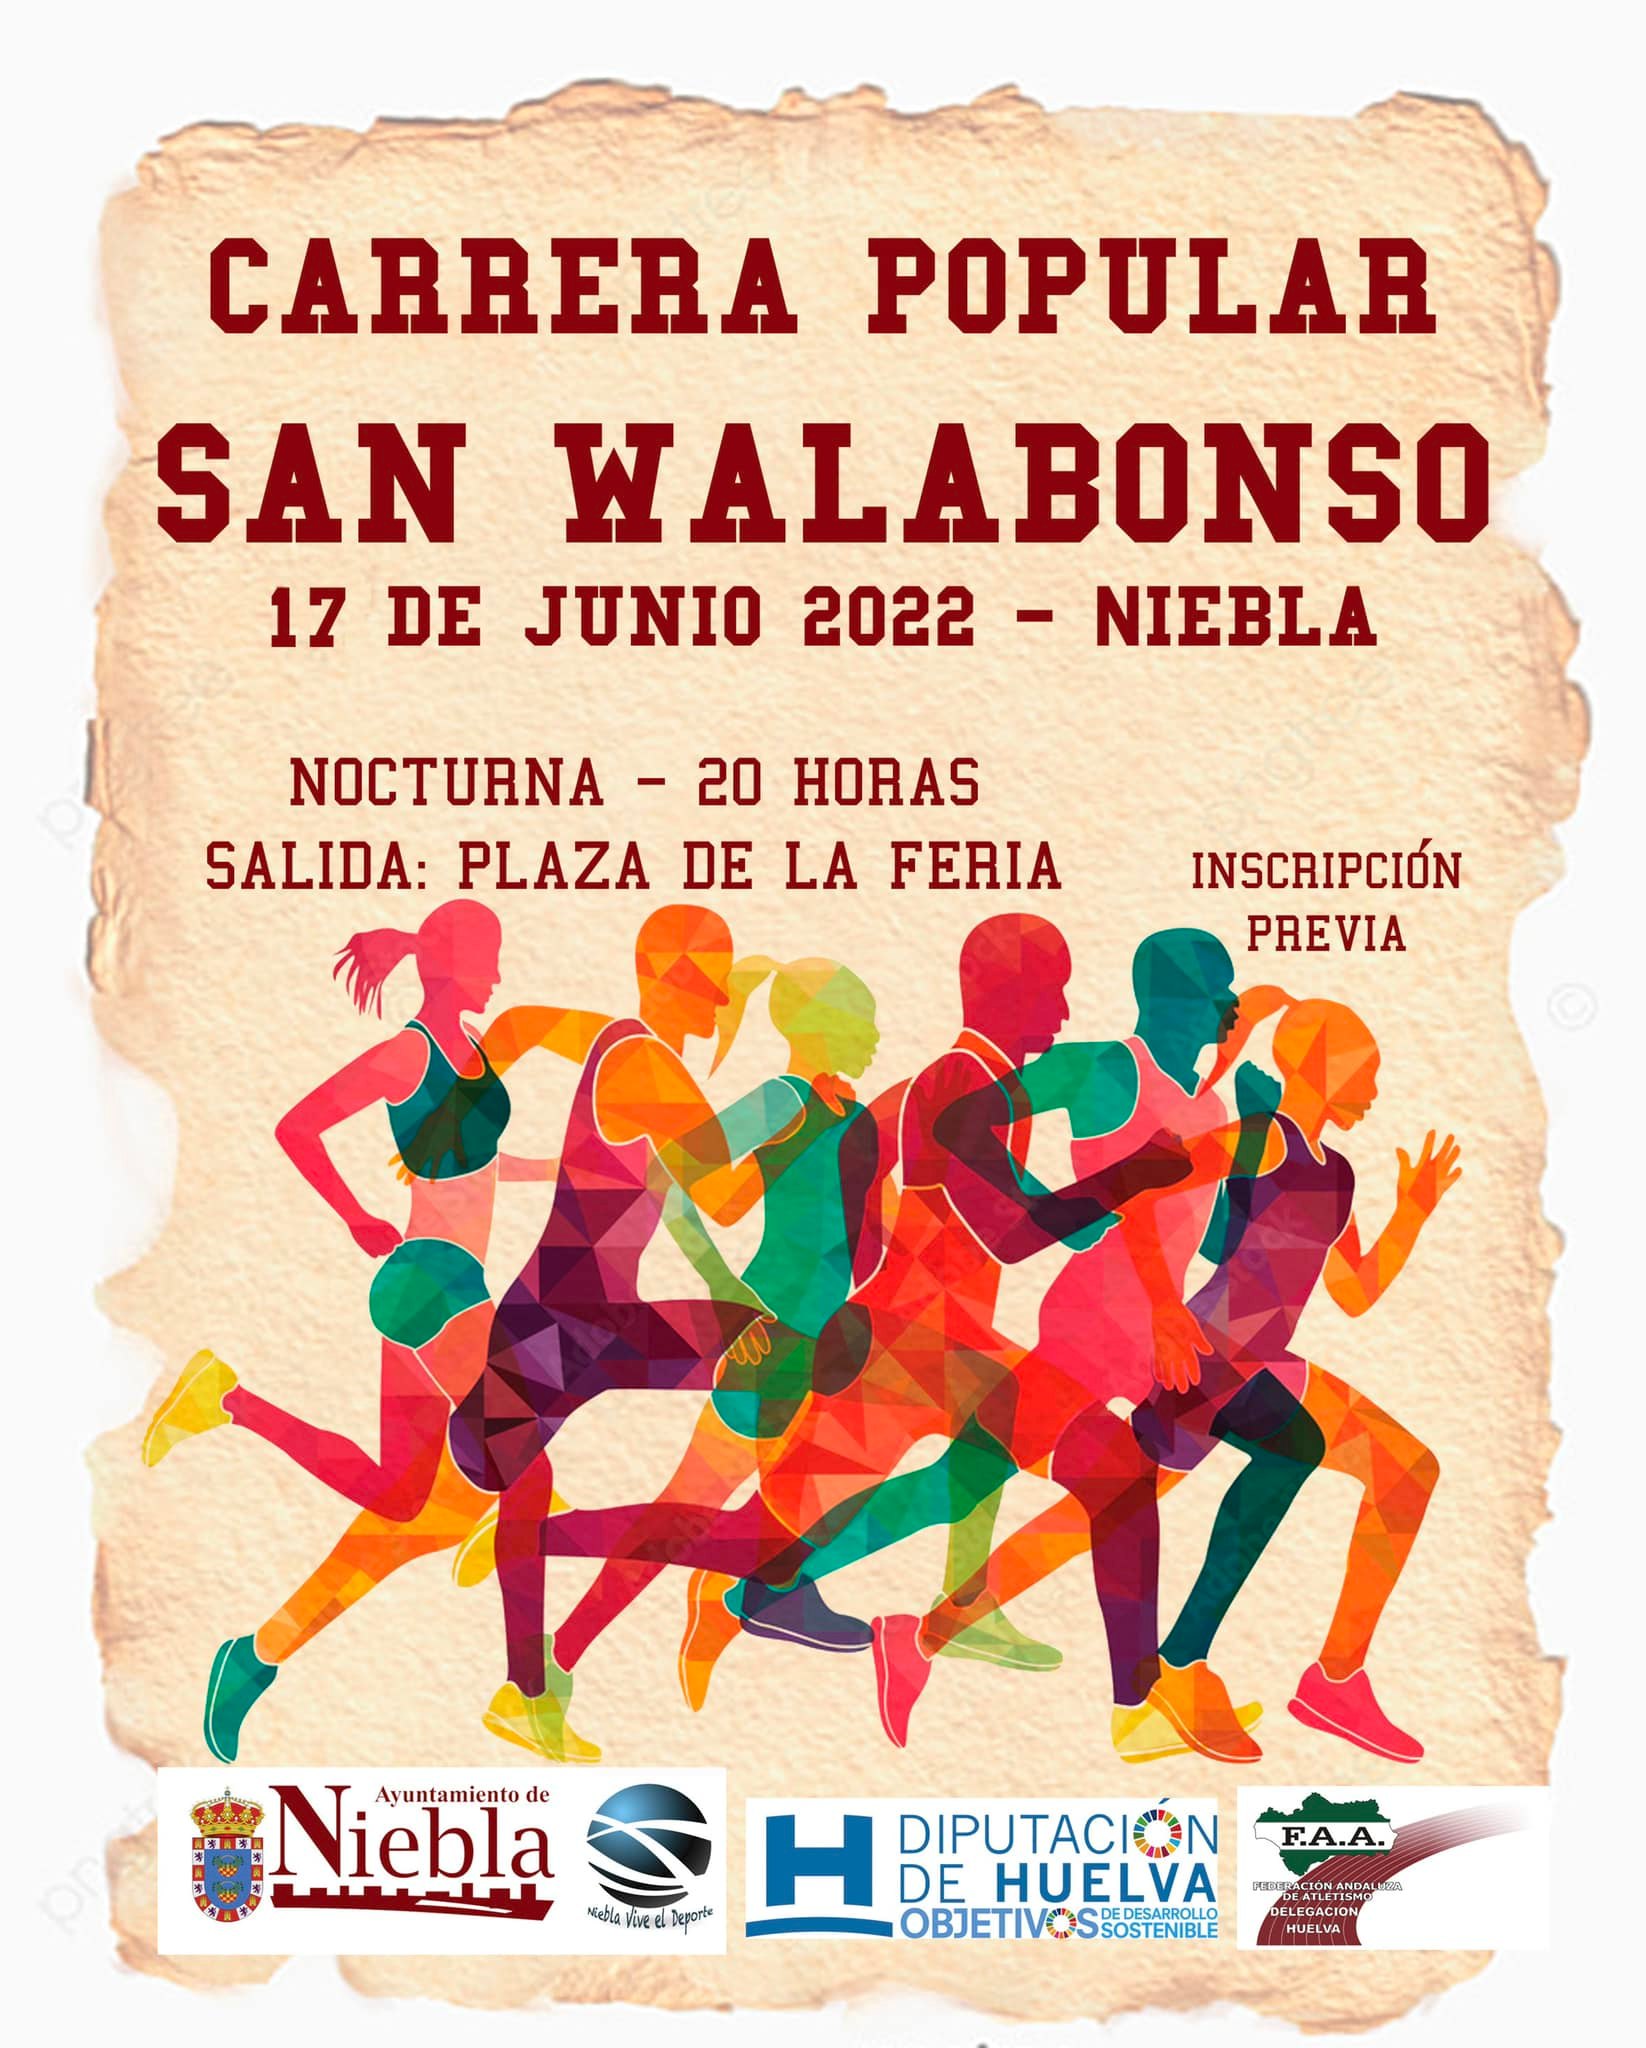 Carrera popular San Walabonso 22